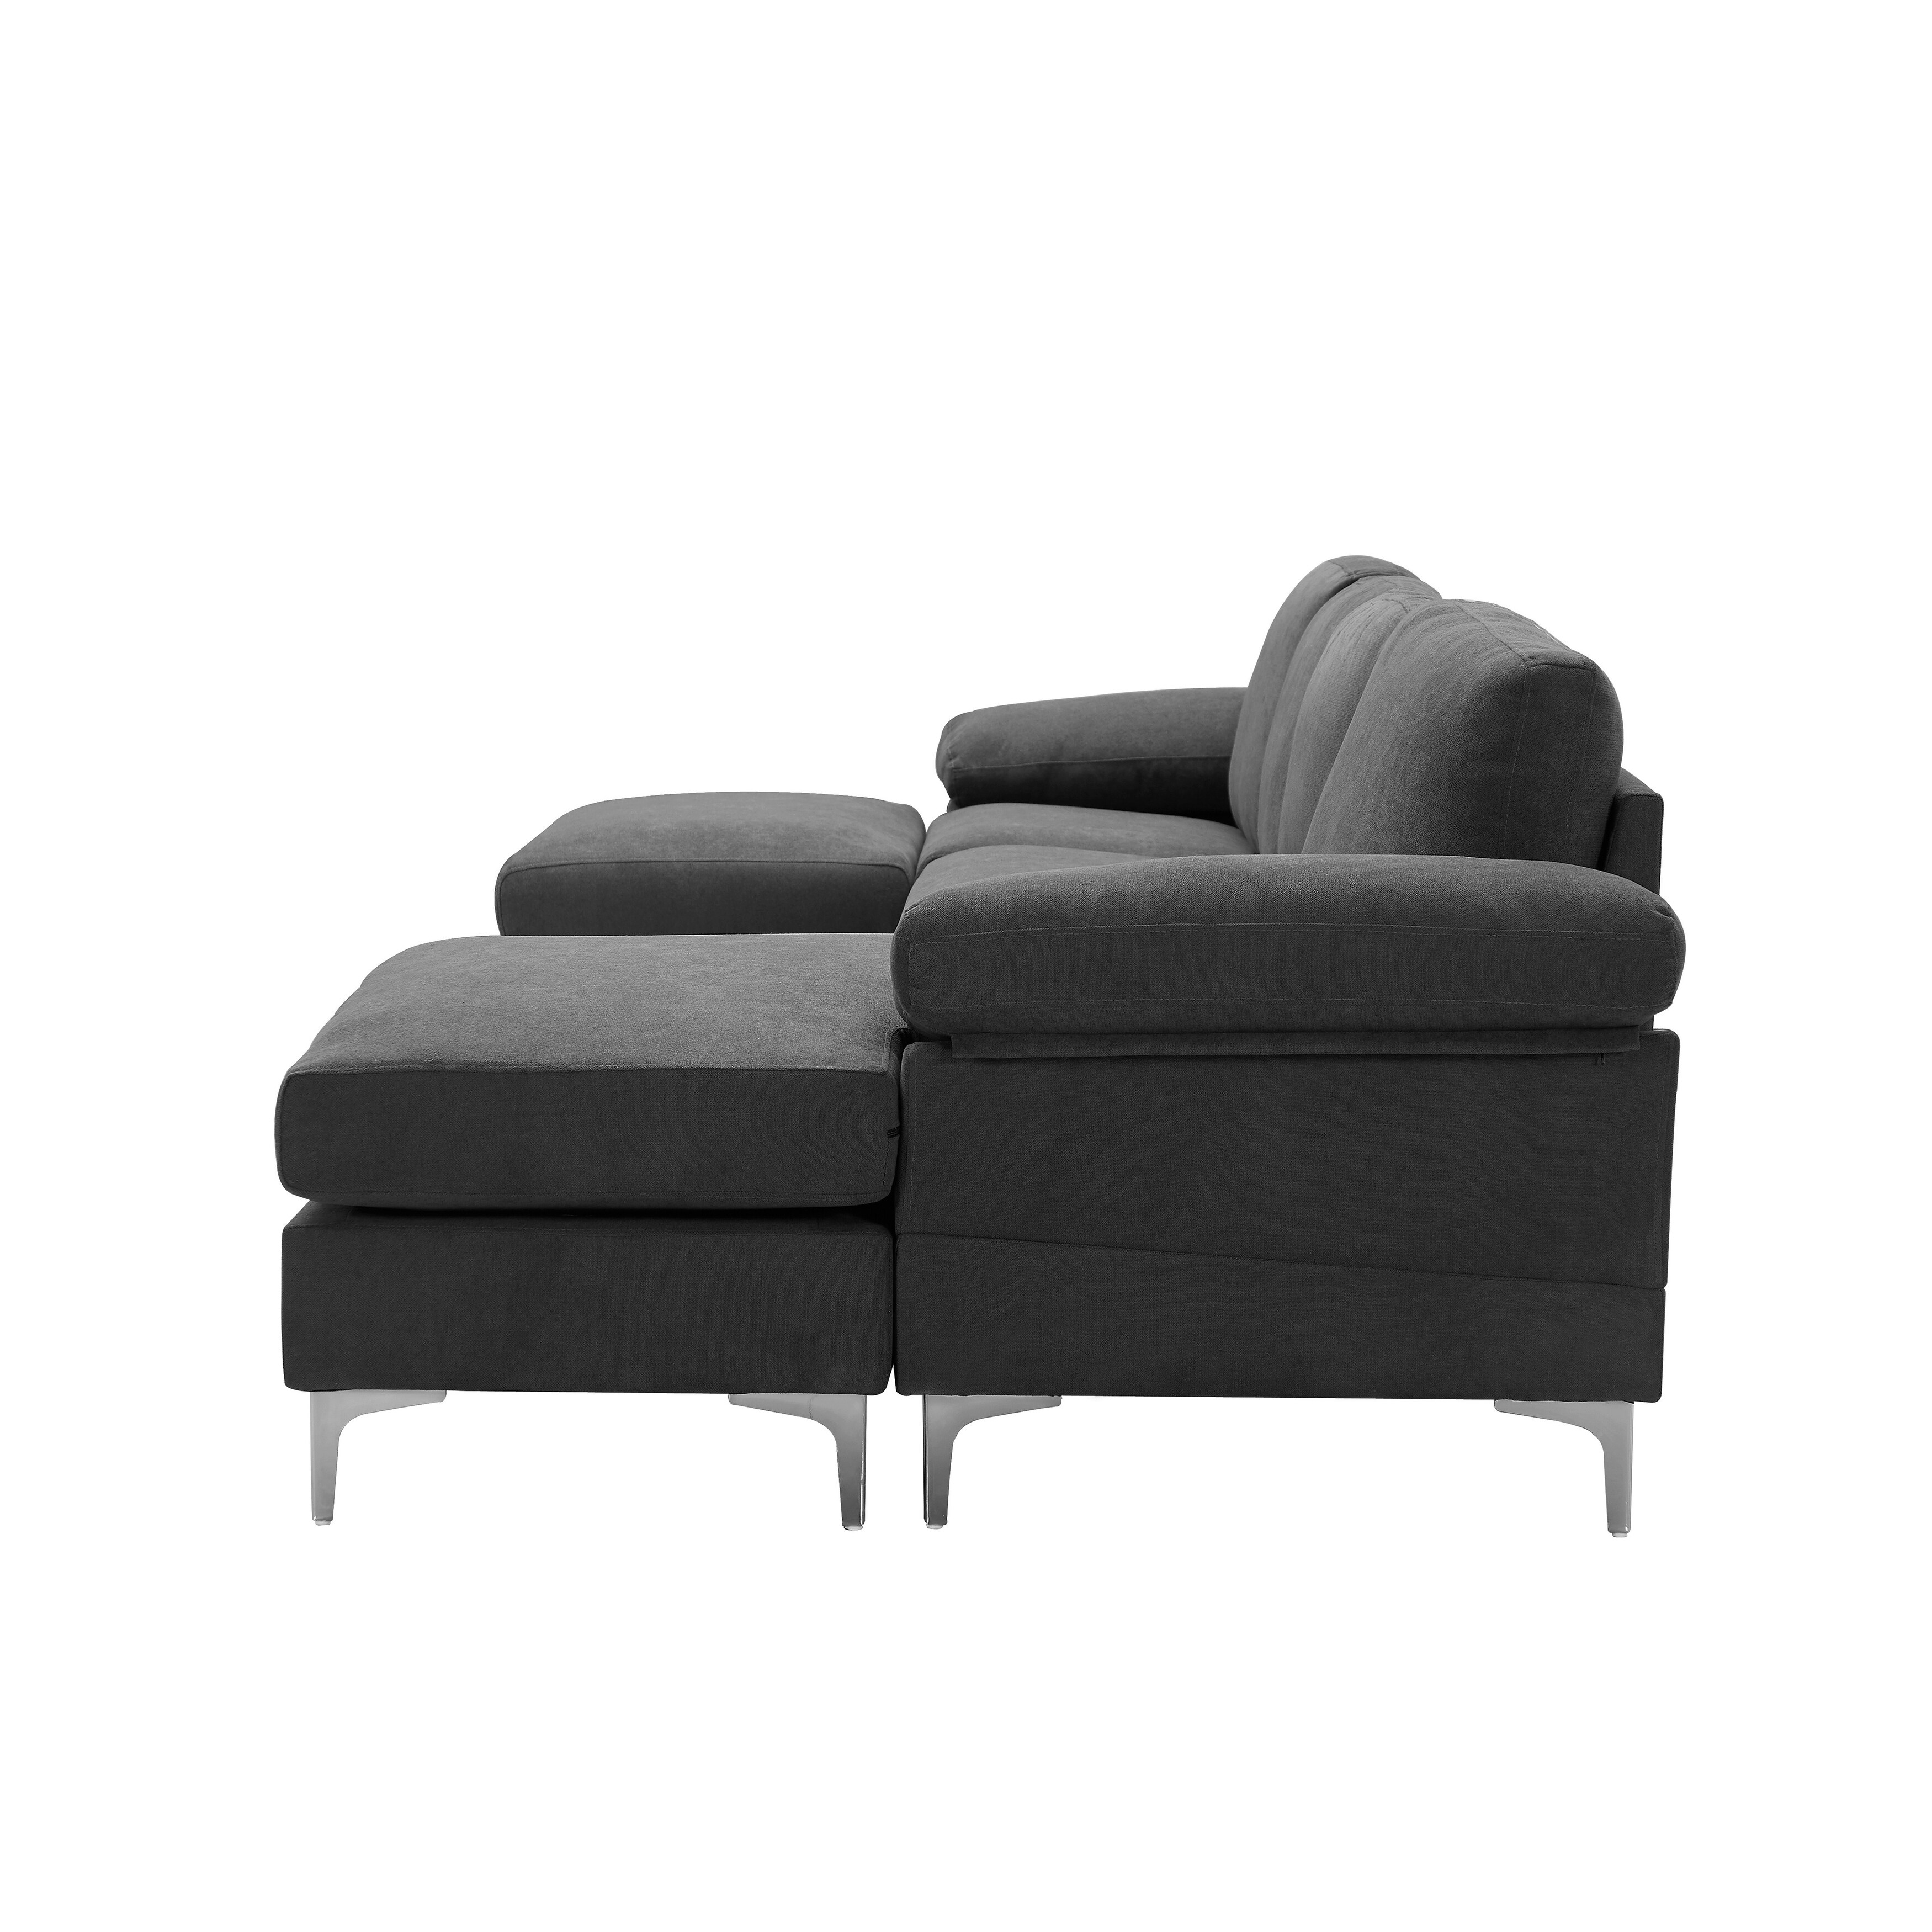 Convertible Symmetrical Sectional Sofa Fabric - Navy Blue